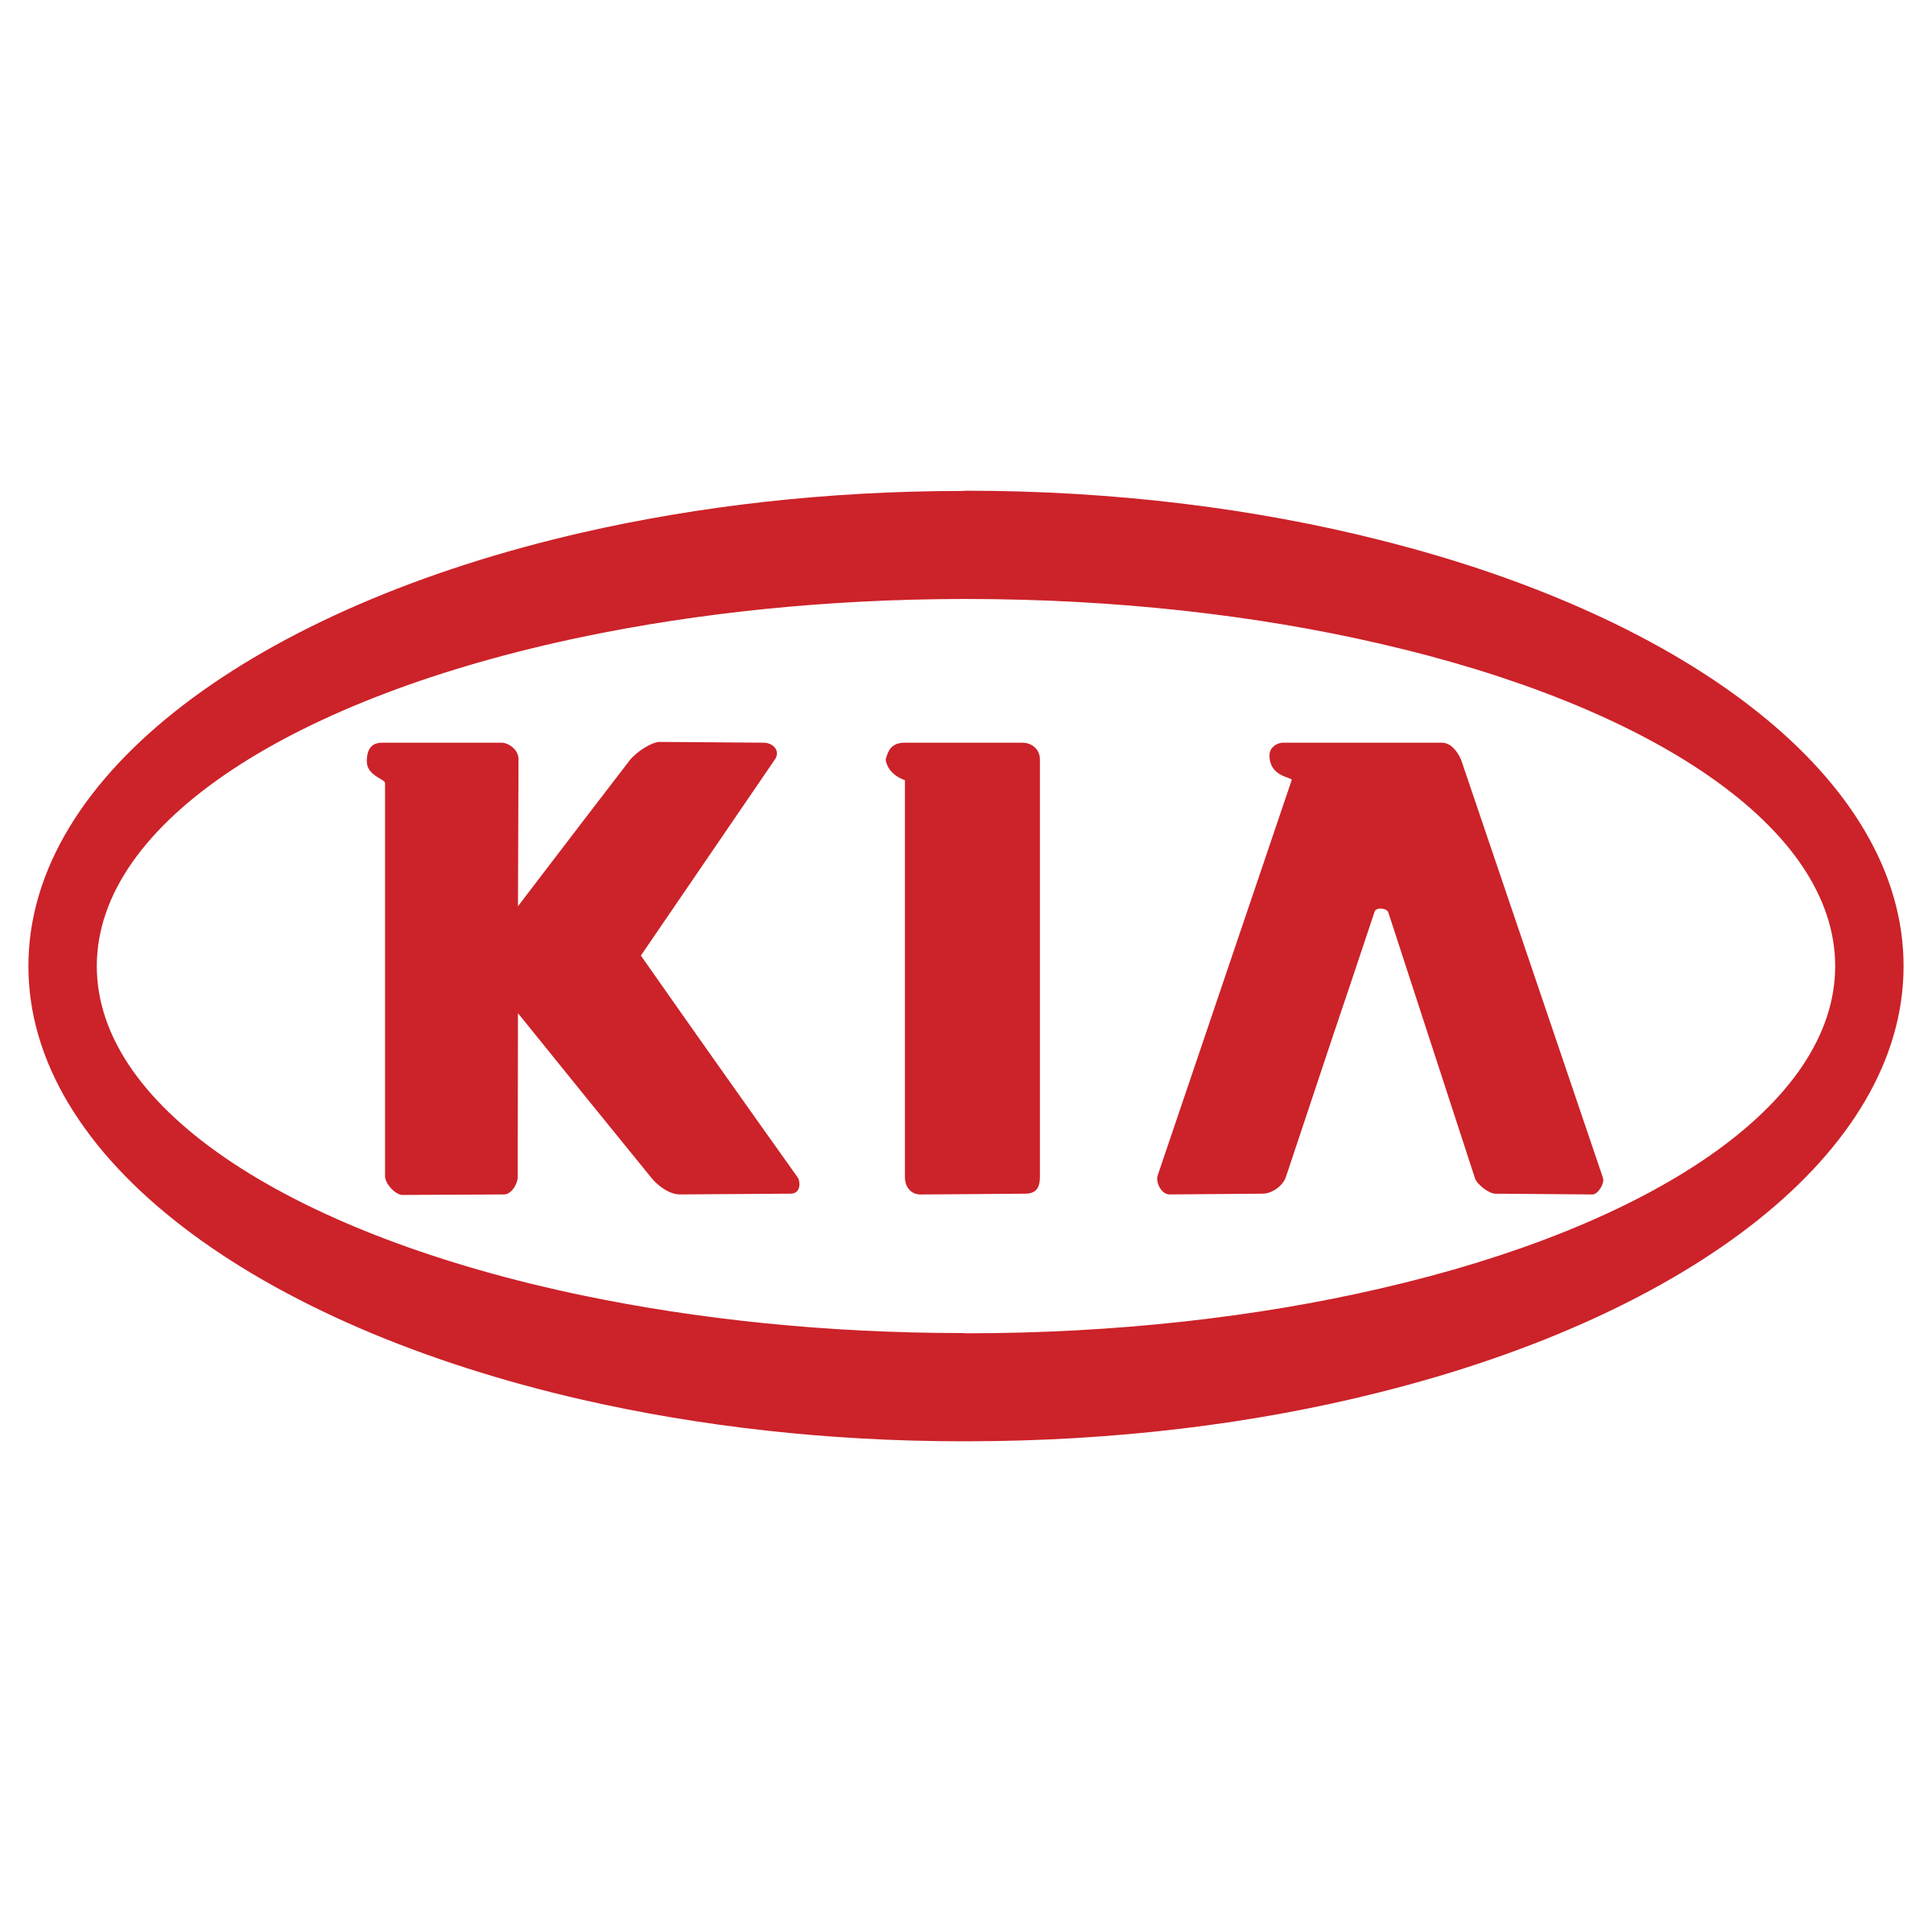 Kia Logo Png Transparent & Svg Vector - Pluspng Pluspng, Kia Logo PNG - Free PNG